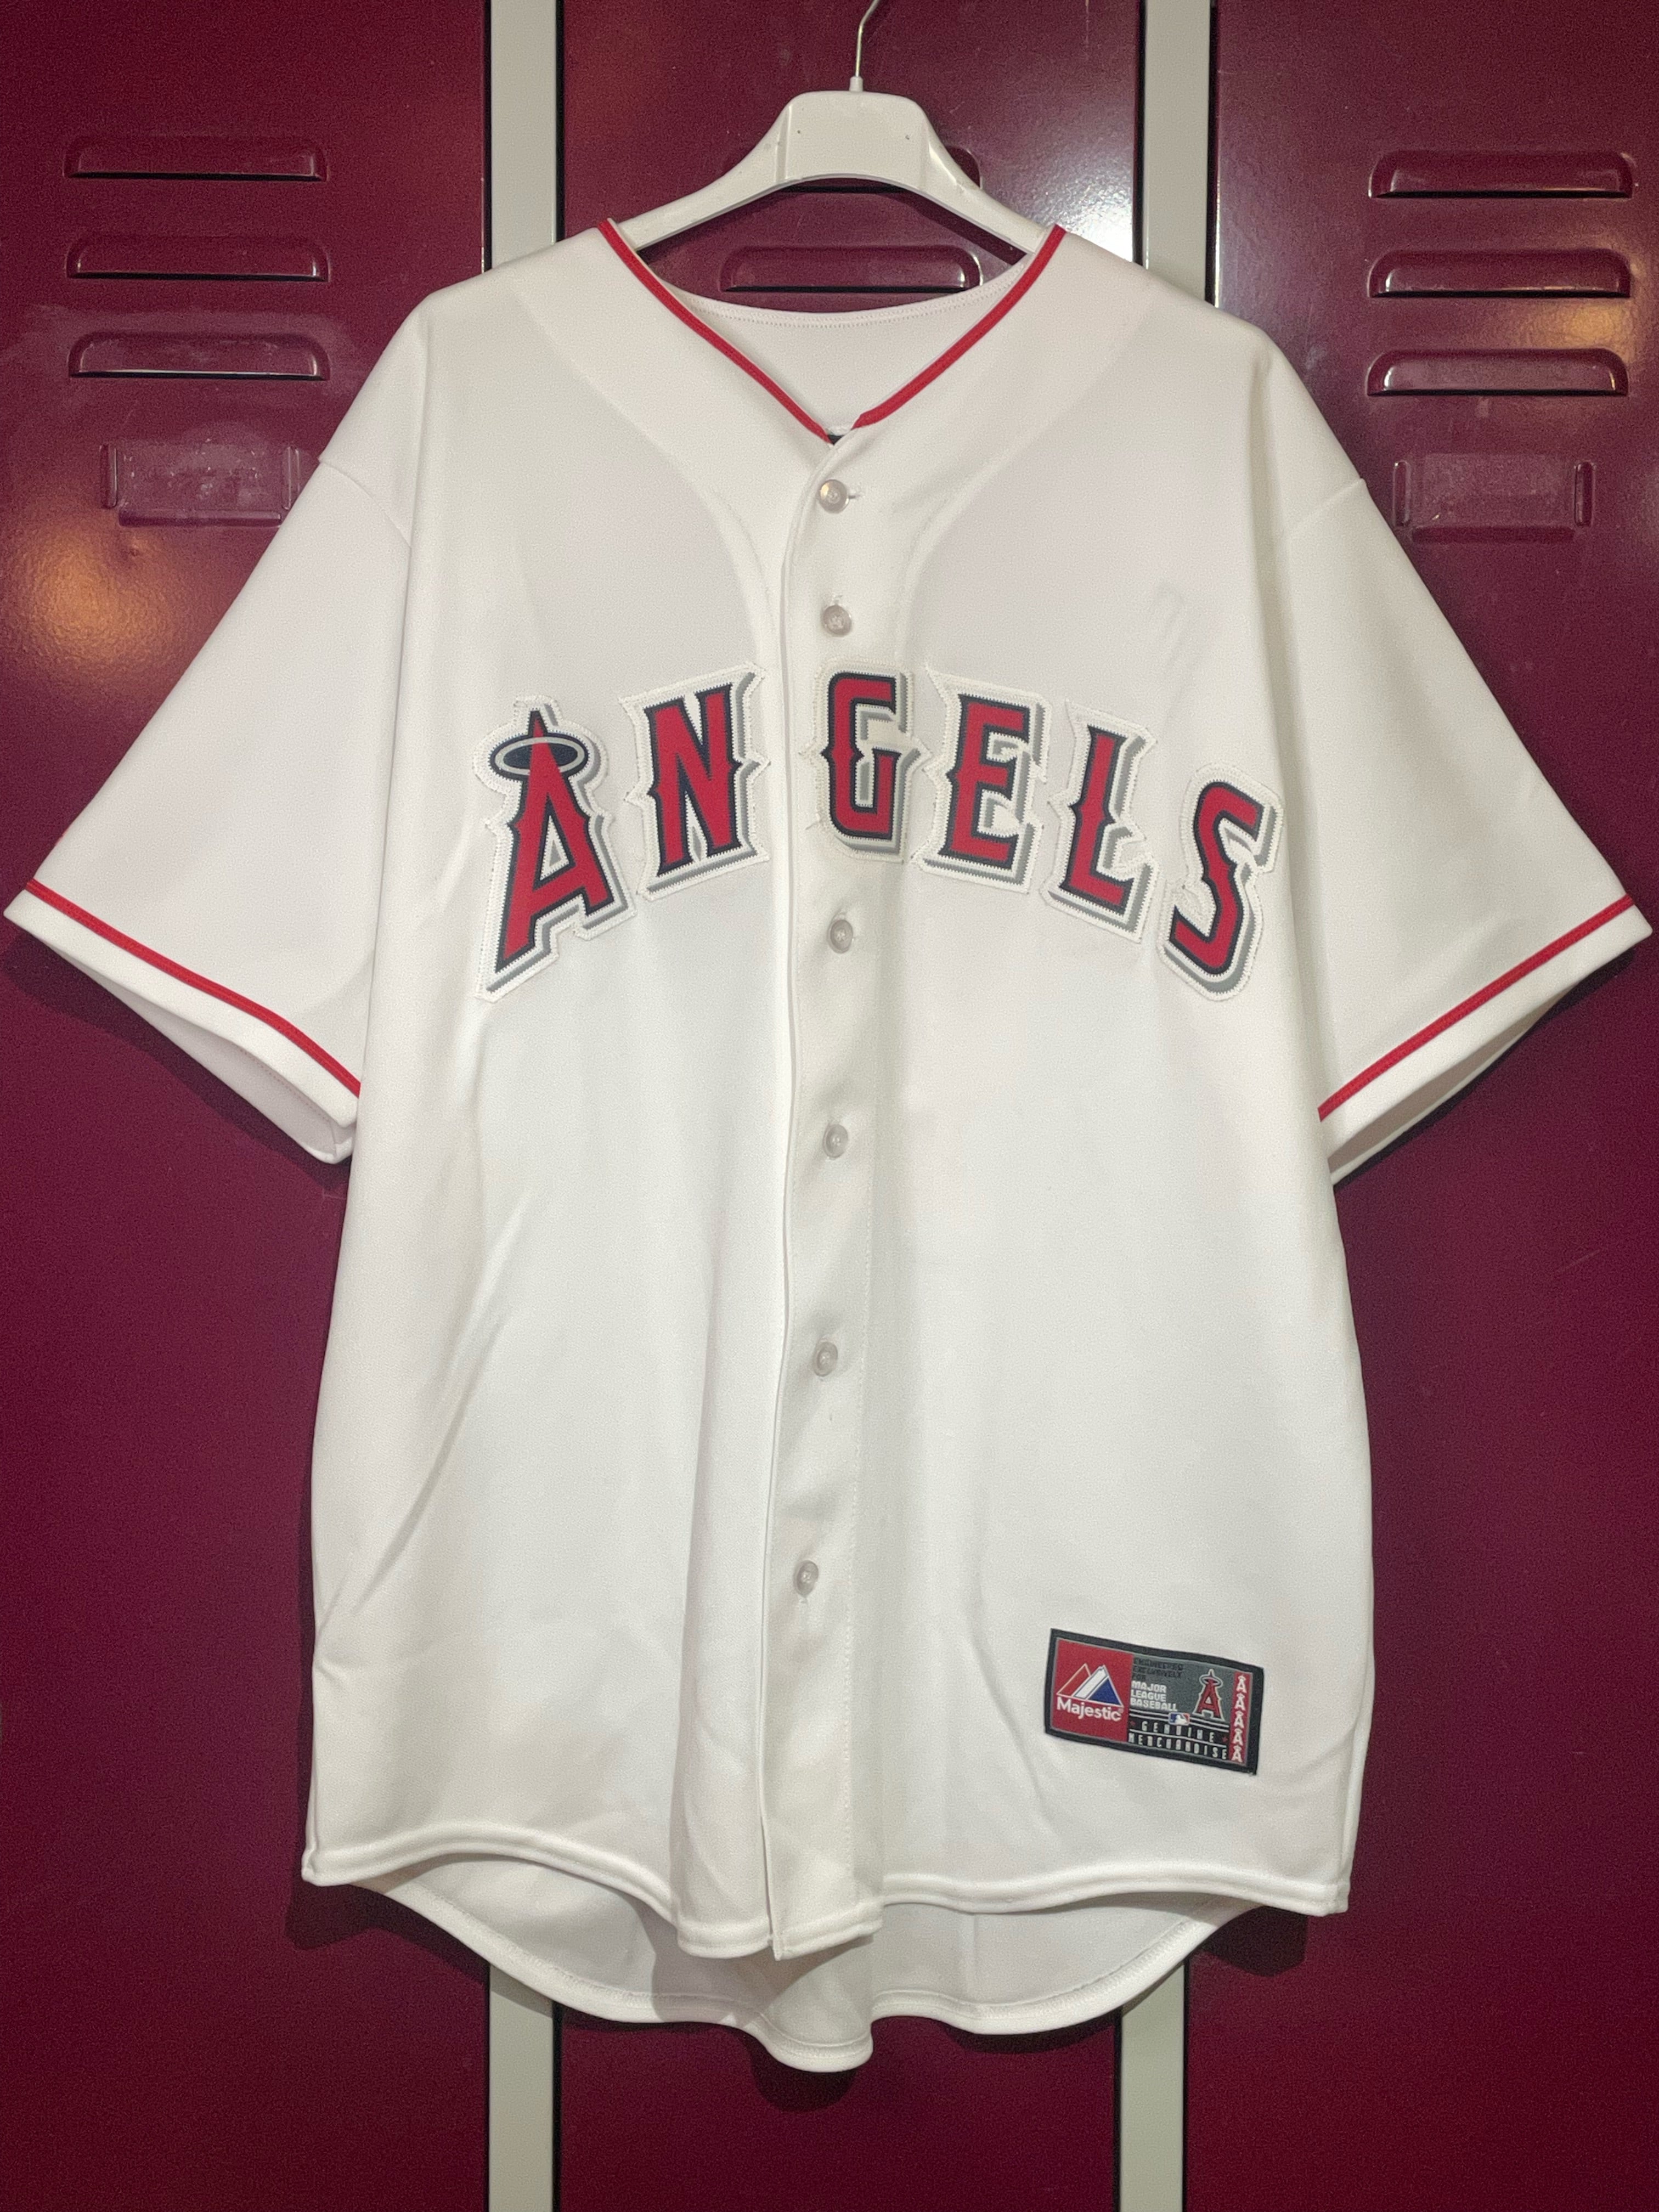 angels baseball attire